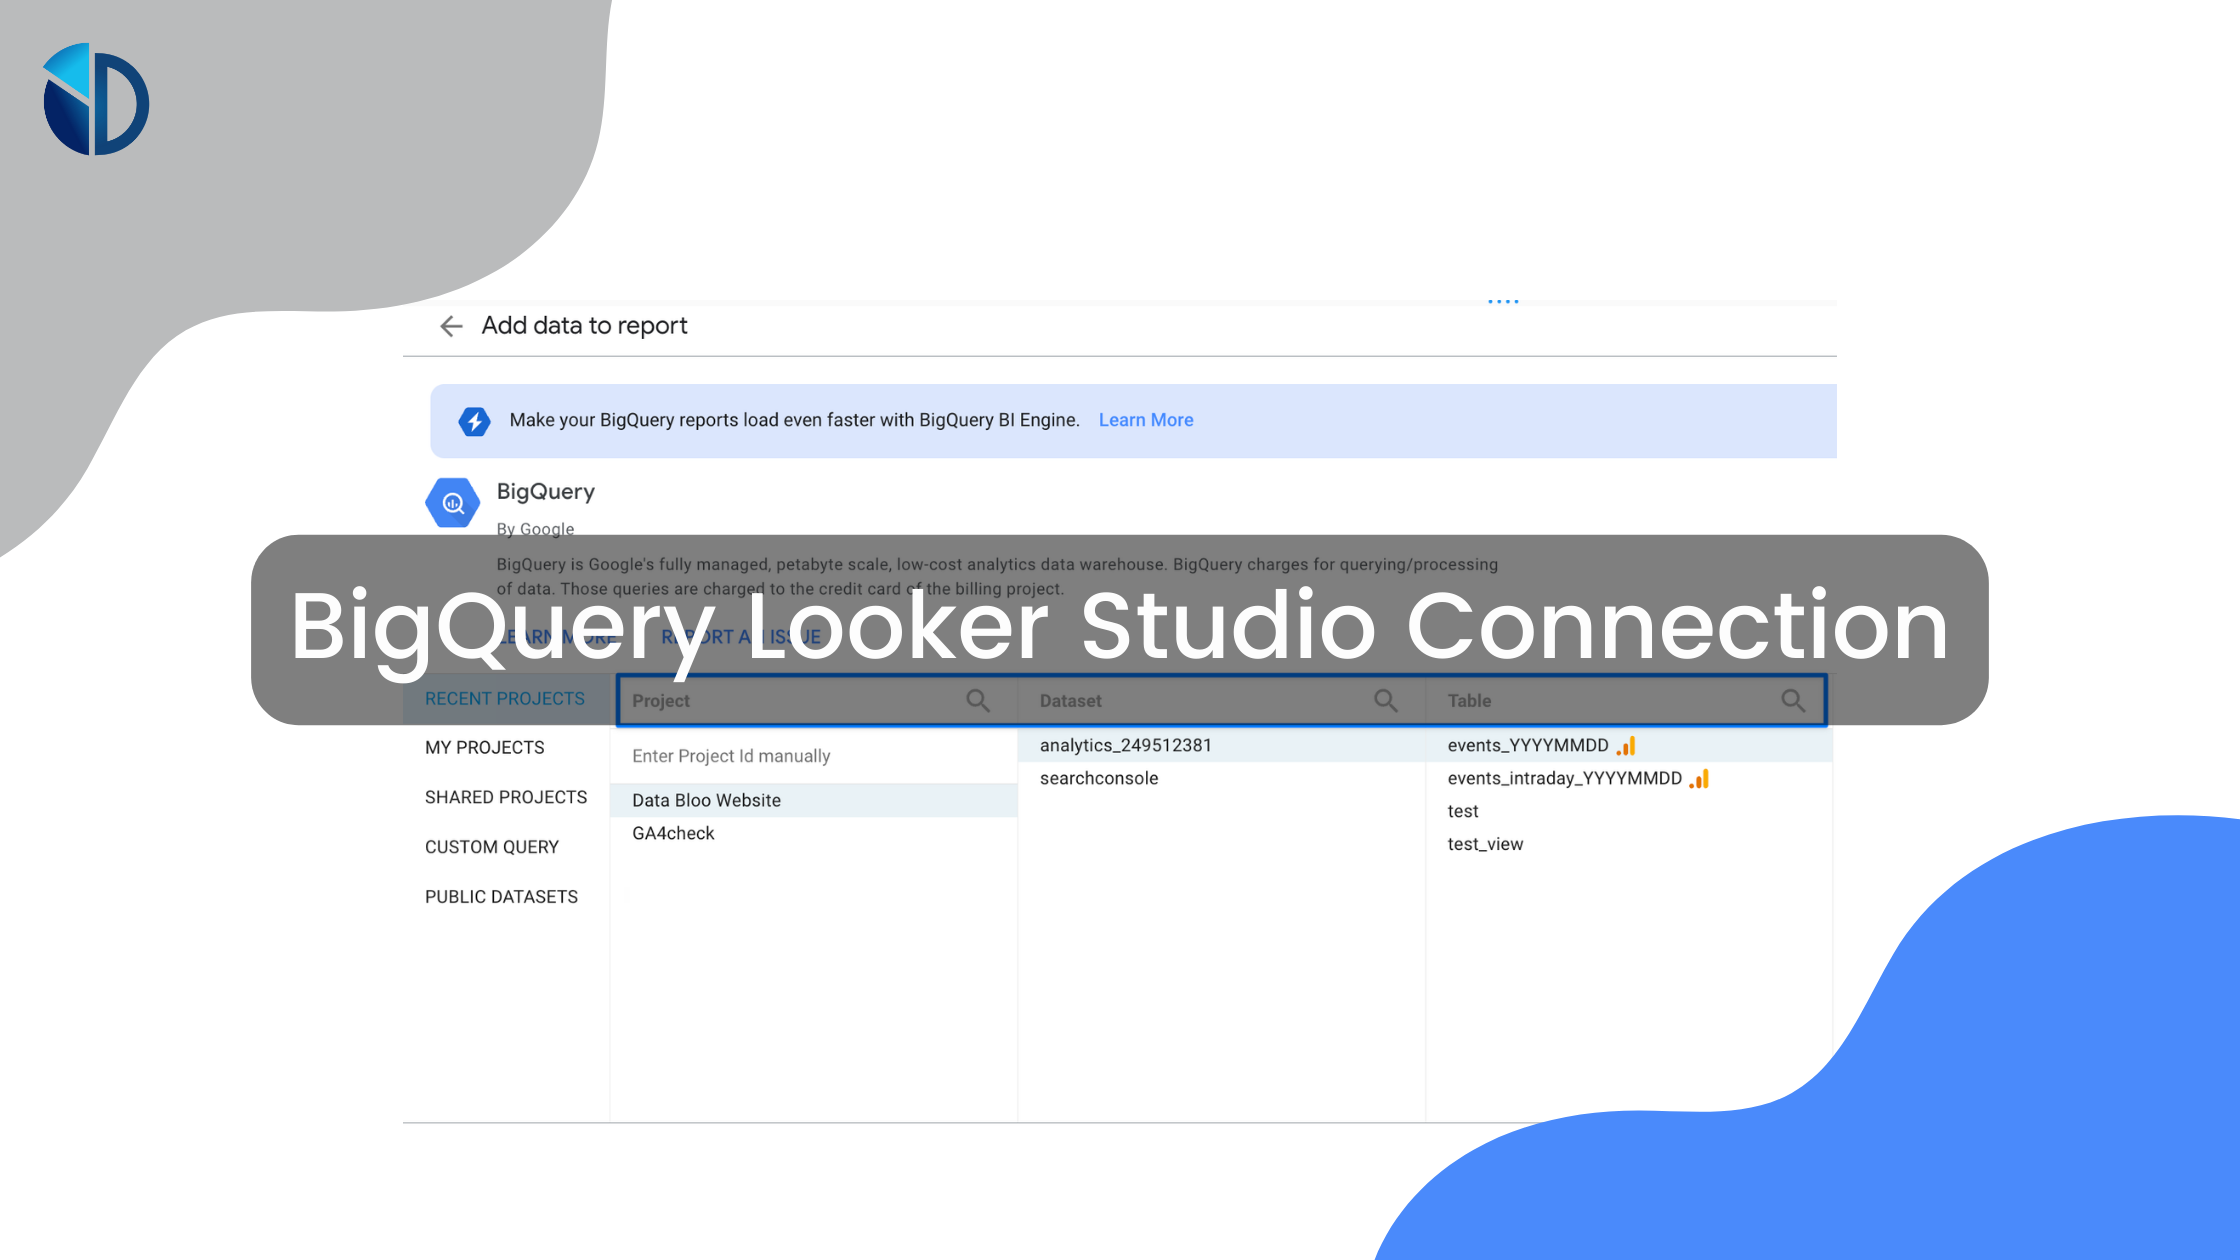 BigQuery Looker Studio Connection - Data Bloo